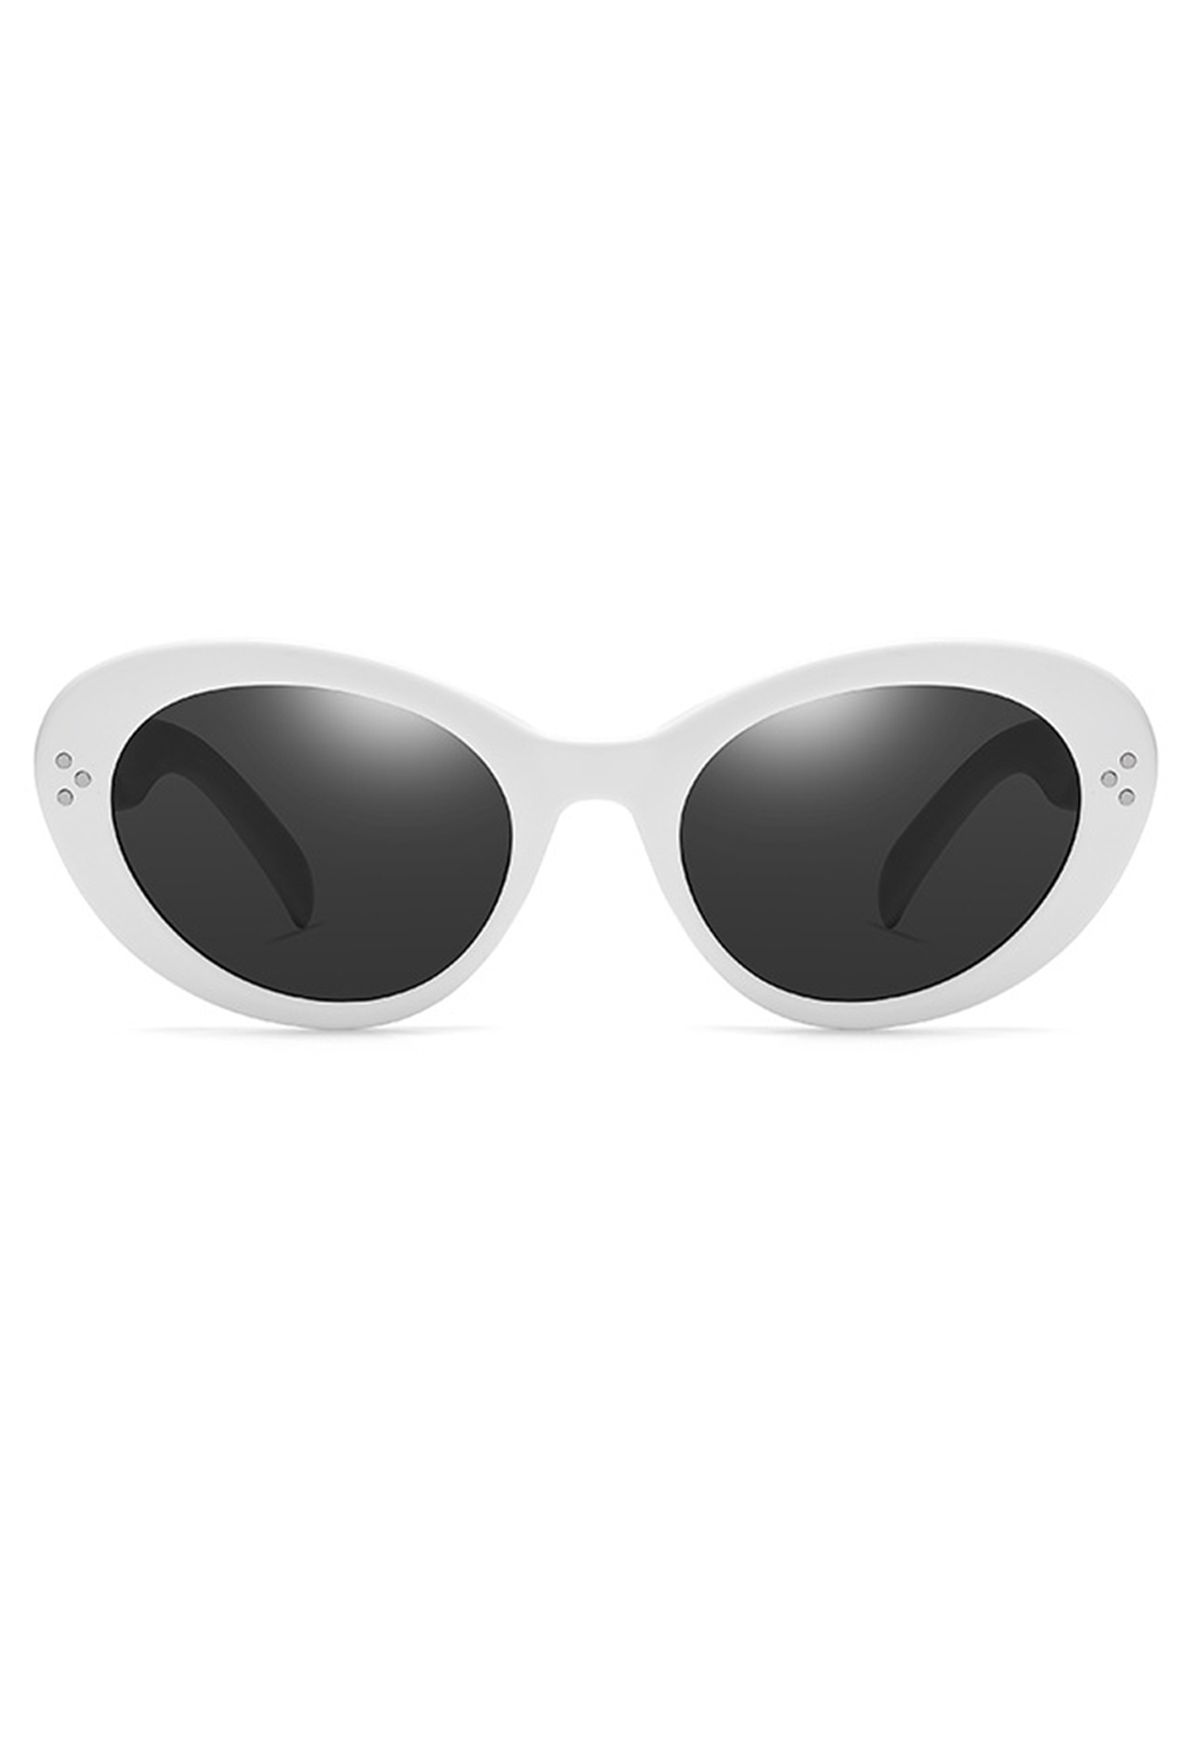 Retro Full Rim Cat-Eye Sunglasses in White - Retro, Indie and Unique Fashion